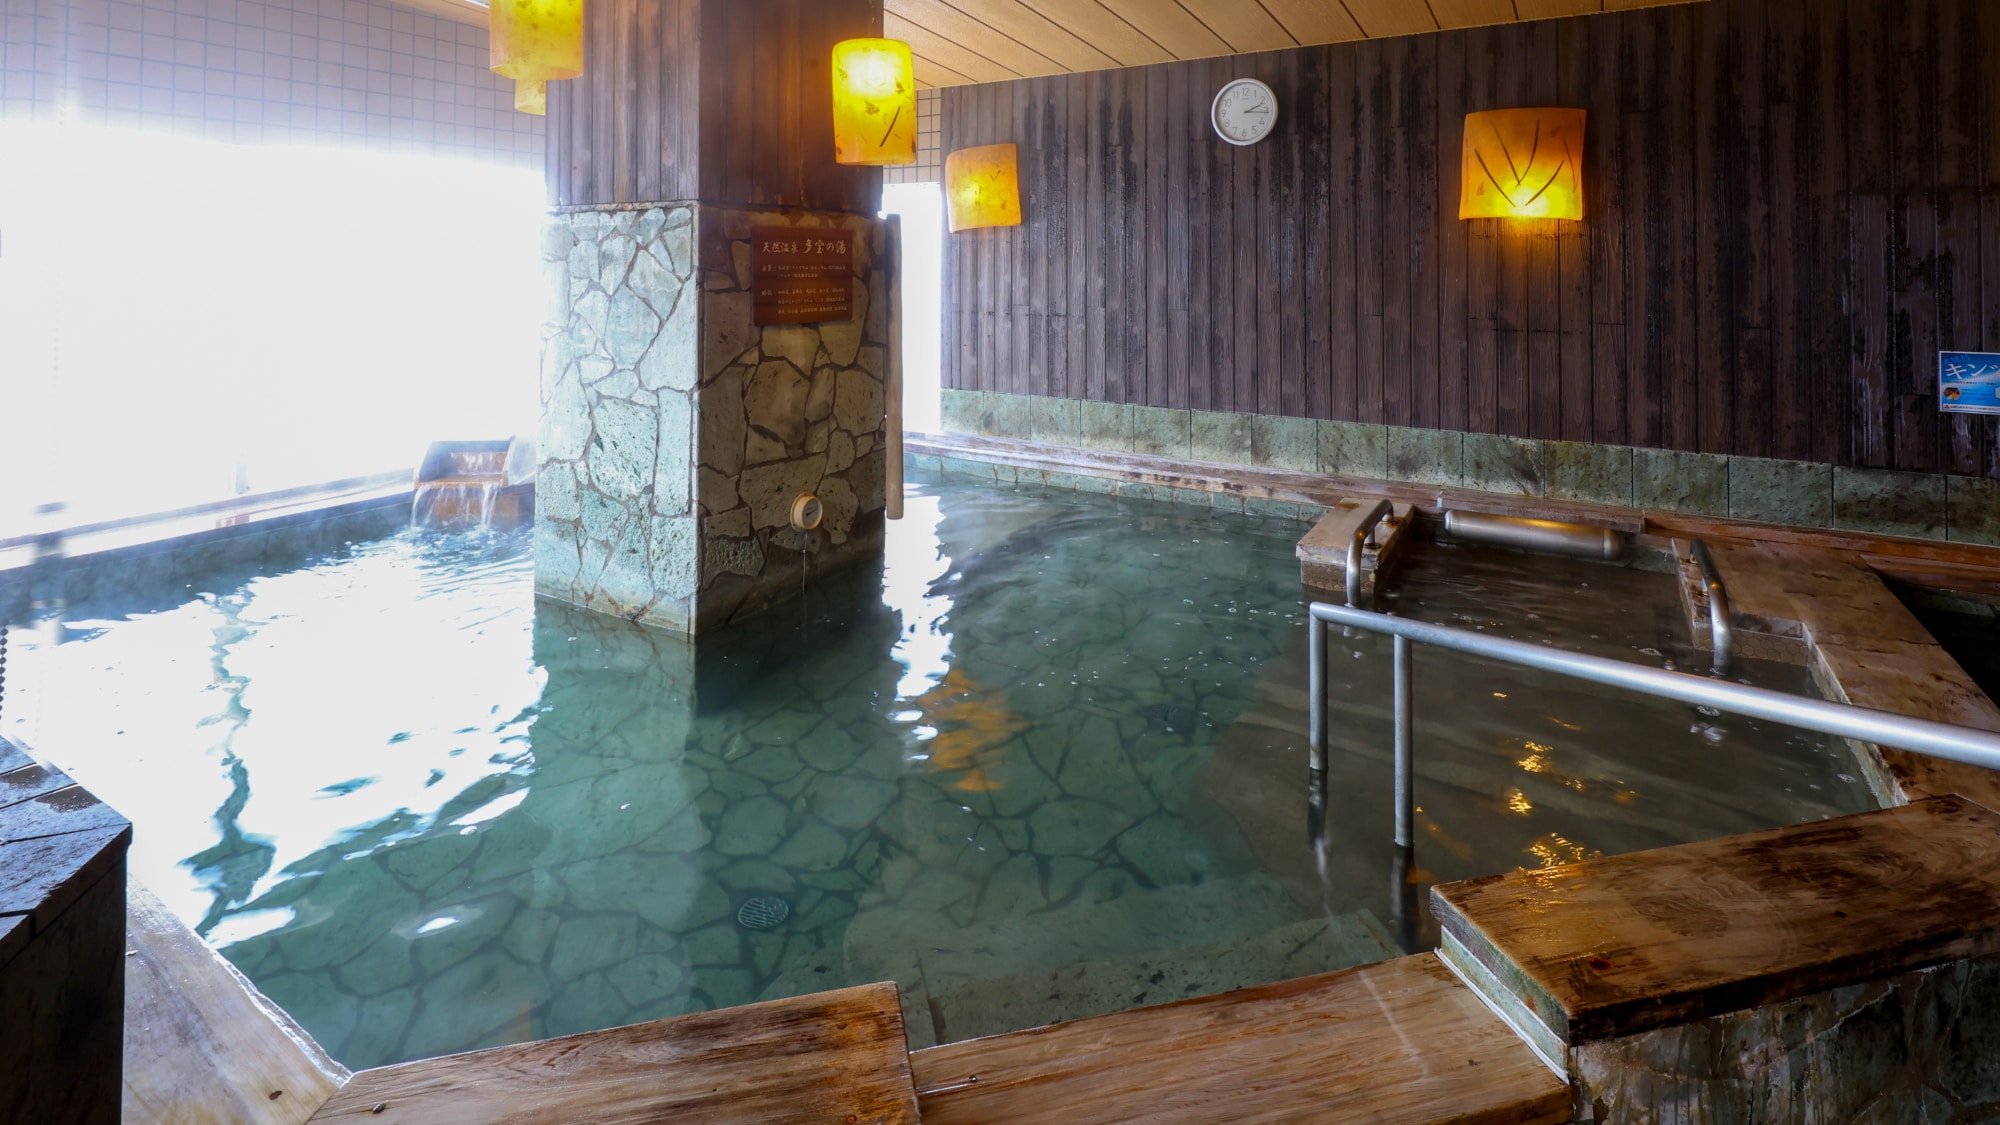 ◆ 10th floor men's public bath indoor bath (hot water temperature: 40-41℃)